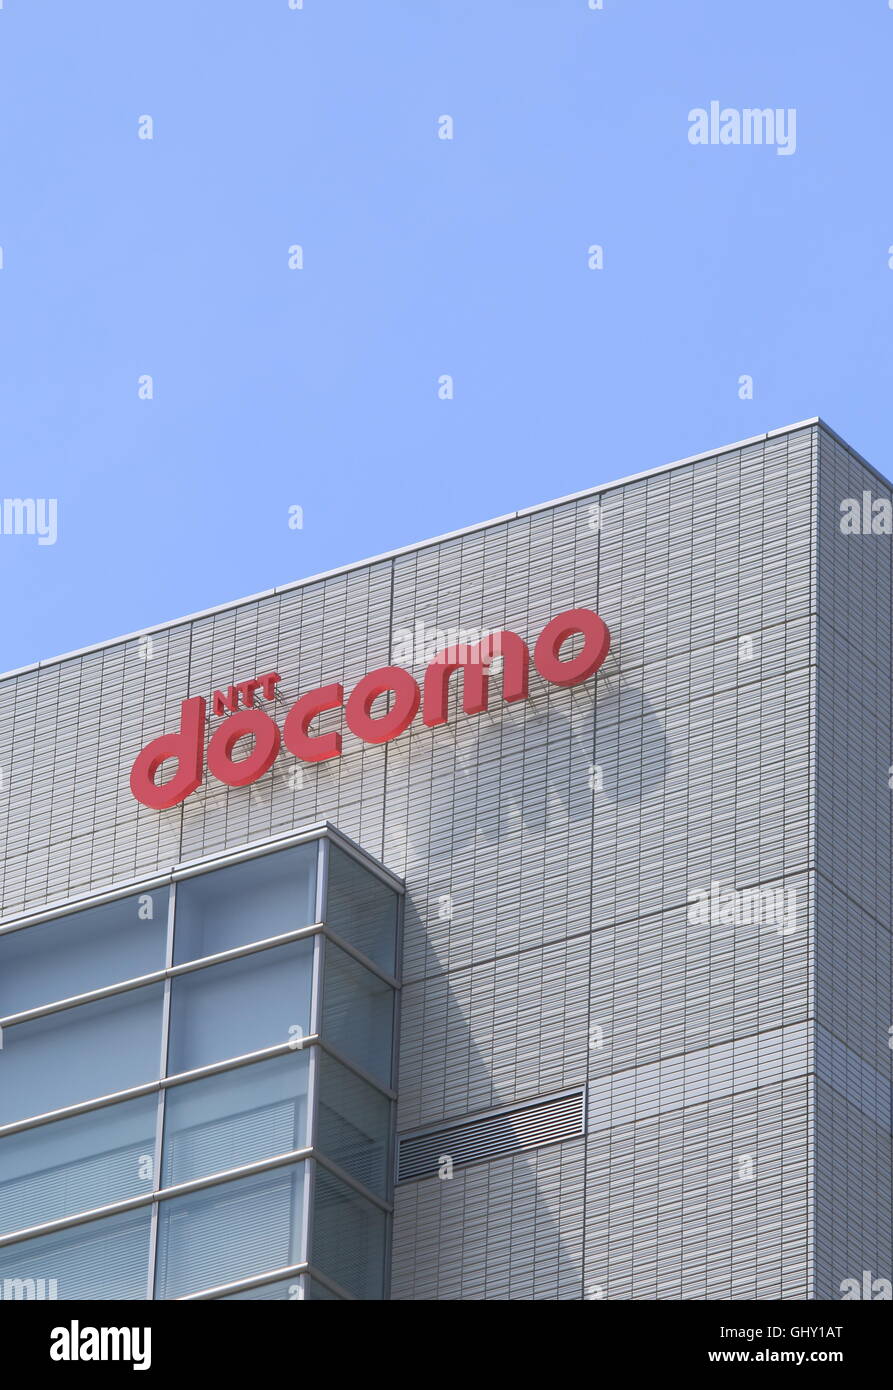 NTT Docomo company logo, the predominant mobile phone operator in Japan headquartered in Tokyo. Stock Photo